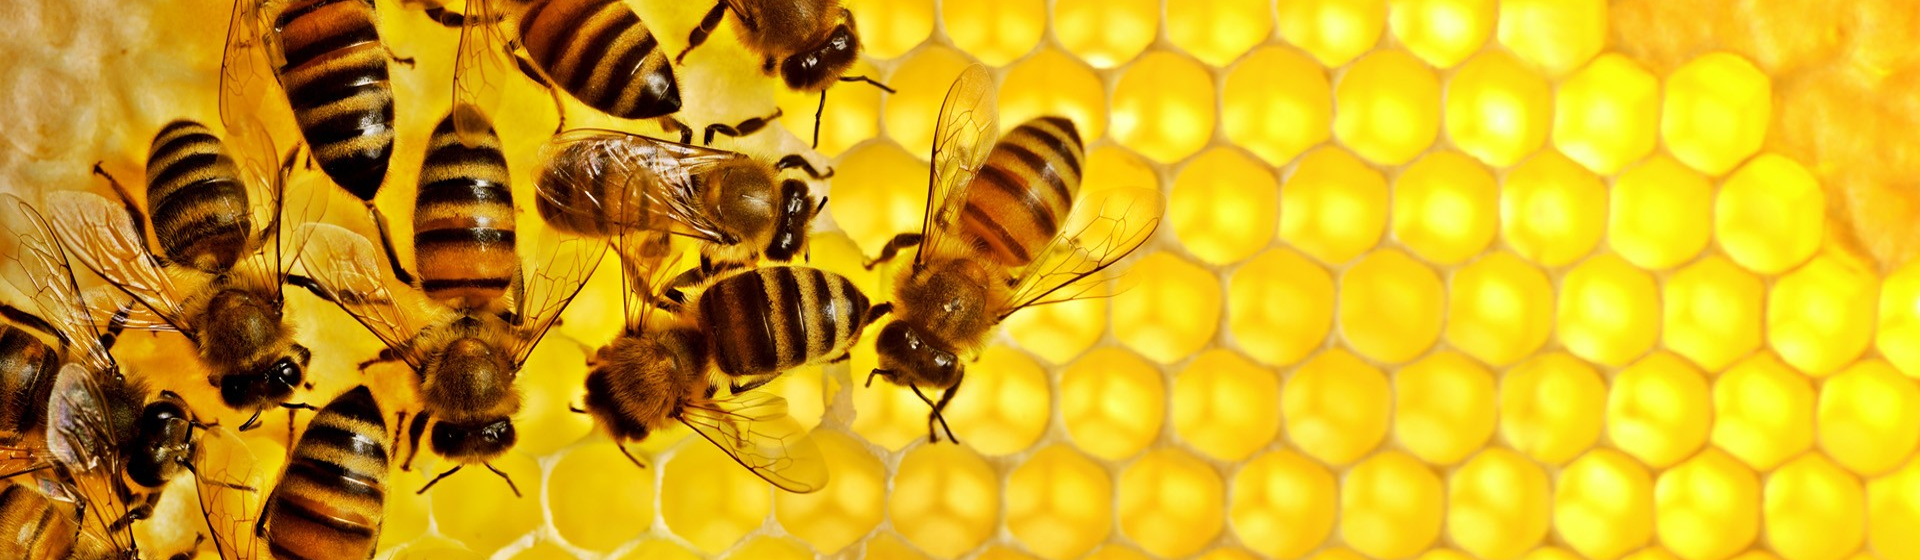 Slideshow image of bees